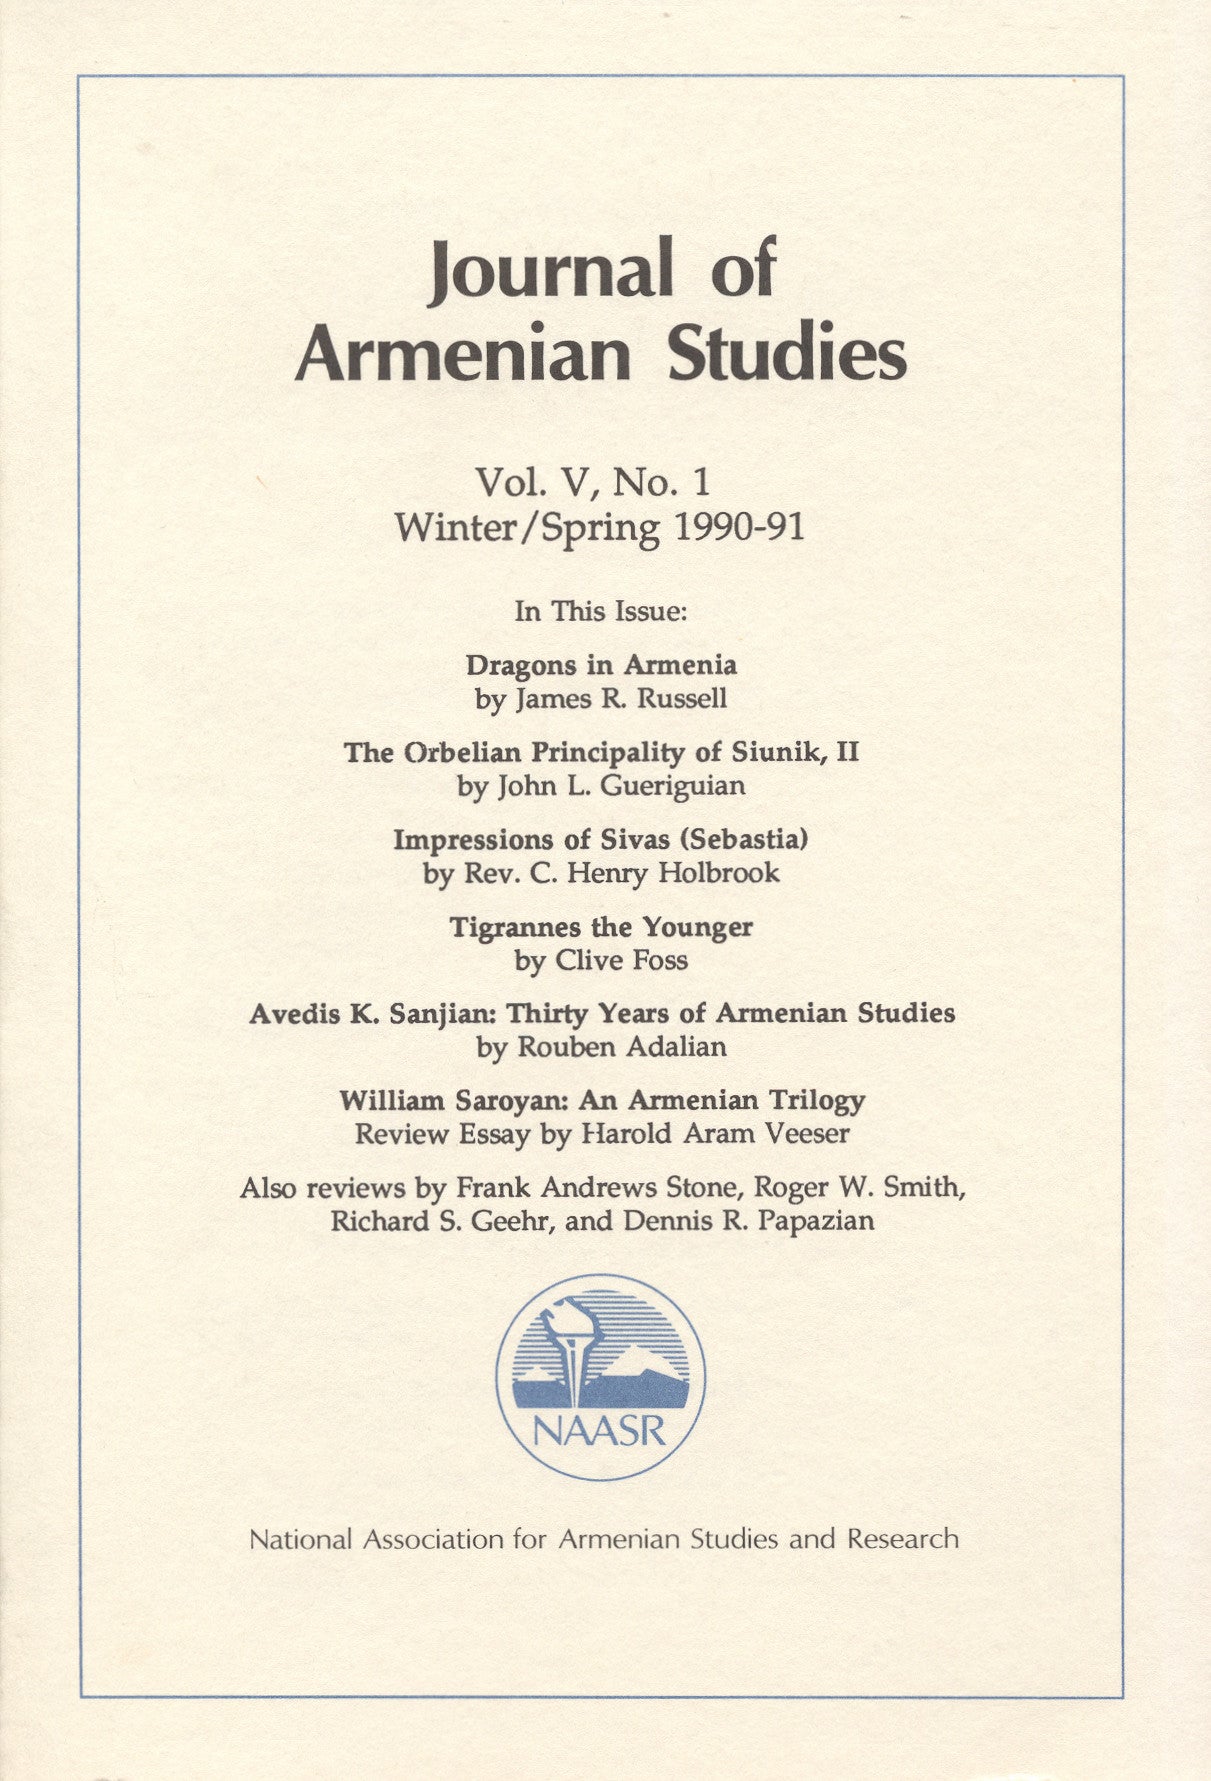 JOURNAL OF ARMENIAN STUDIES: Volume V, Number 1: Winter/Spring 1990-1991